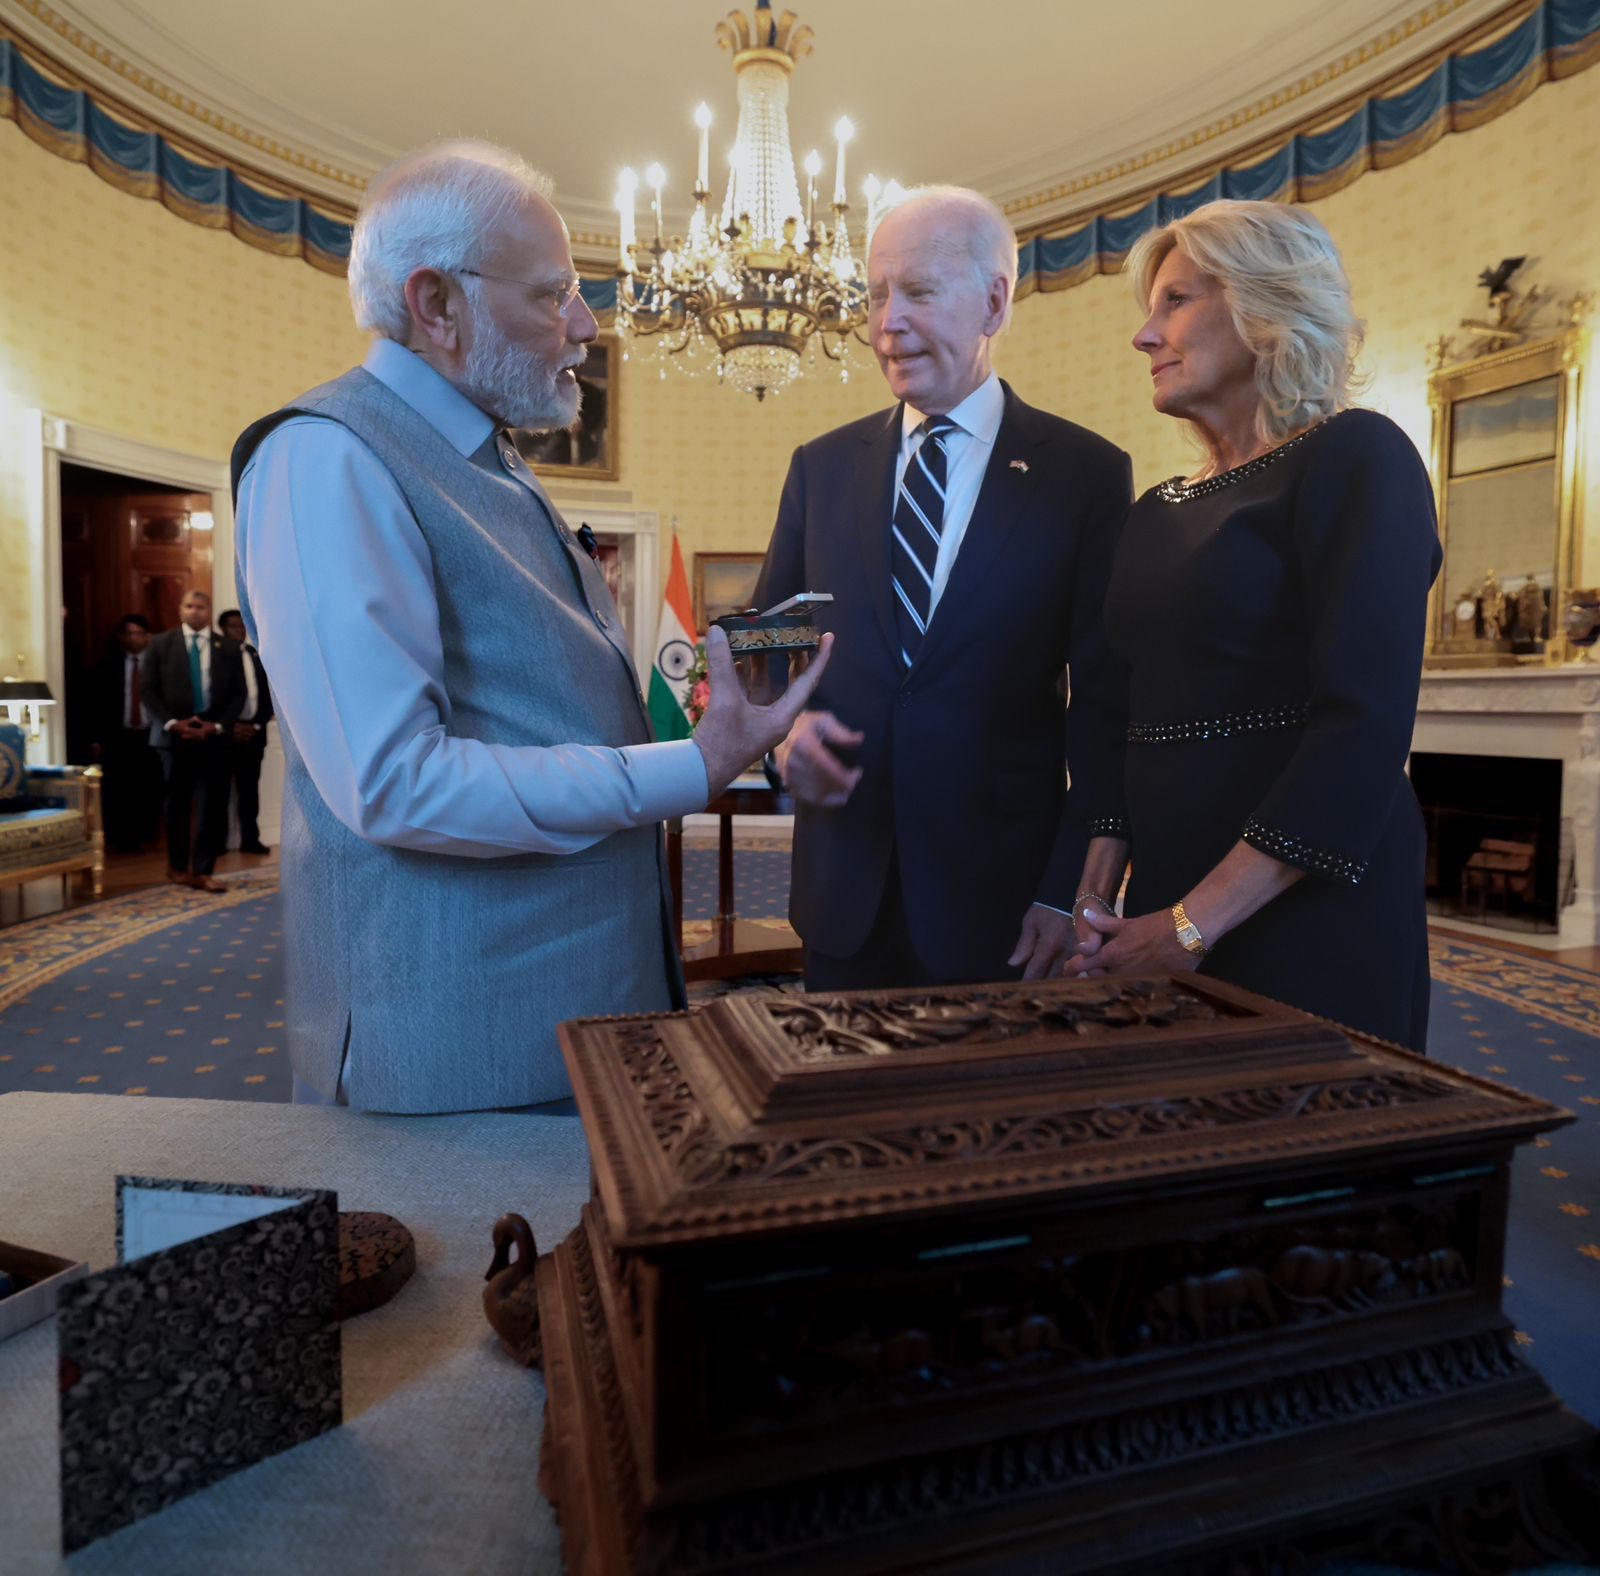 Prime Minister Modi presents First Lady Jill Biden with a 7.5-carat lab-grown diamond